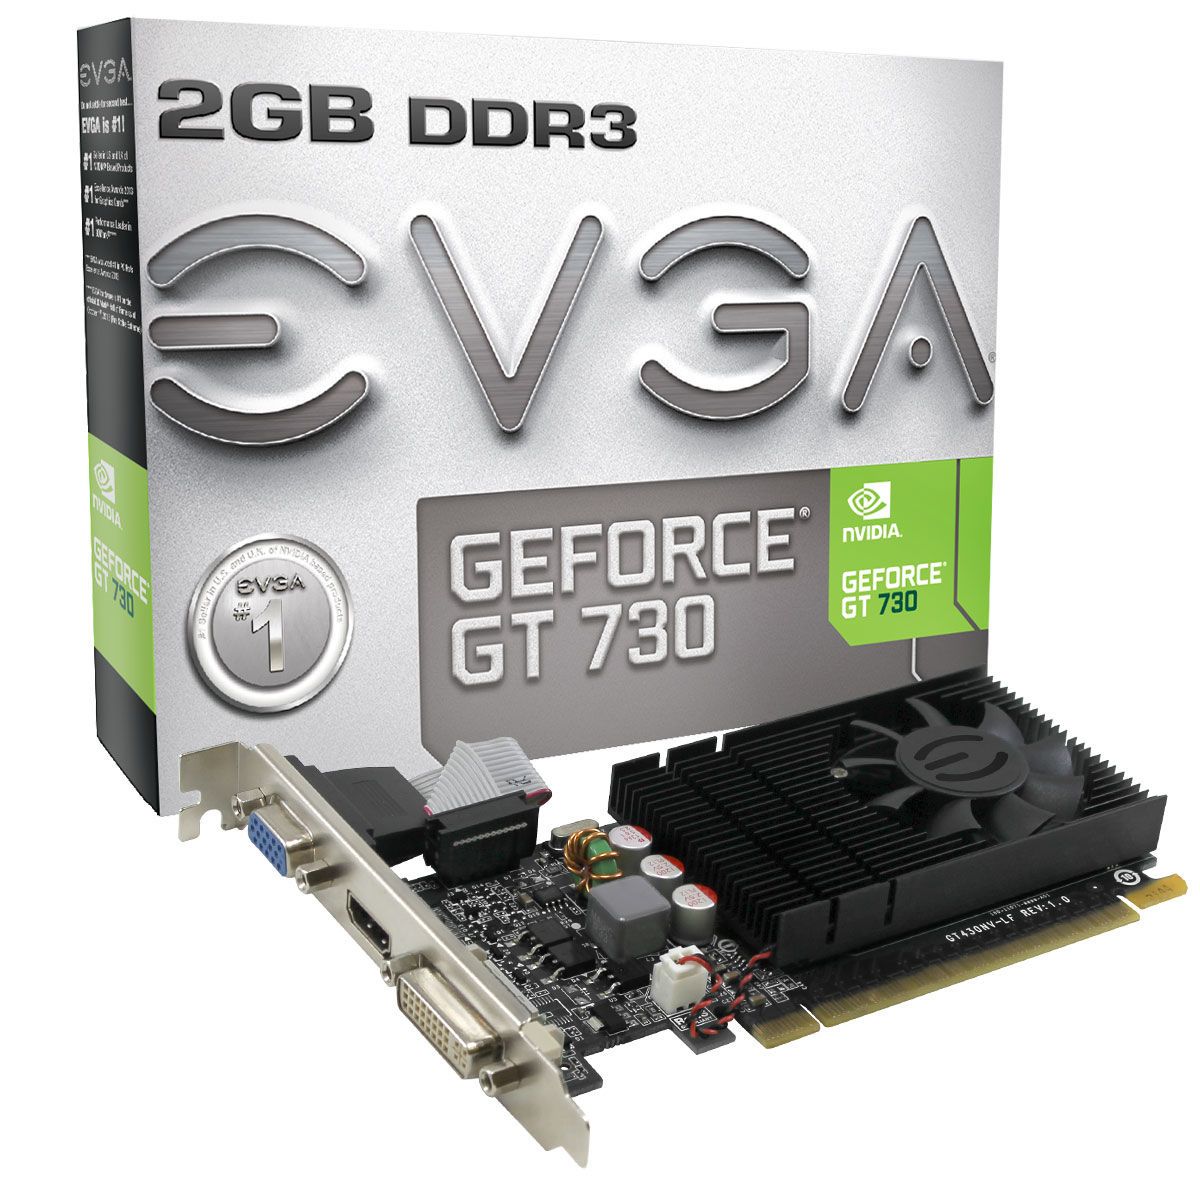 Placa De Video EVGA Geforce GT 730 2GB GDDR3, 128Bit, 02G-P3-2732-KR - BOX